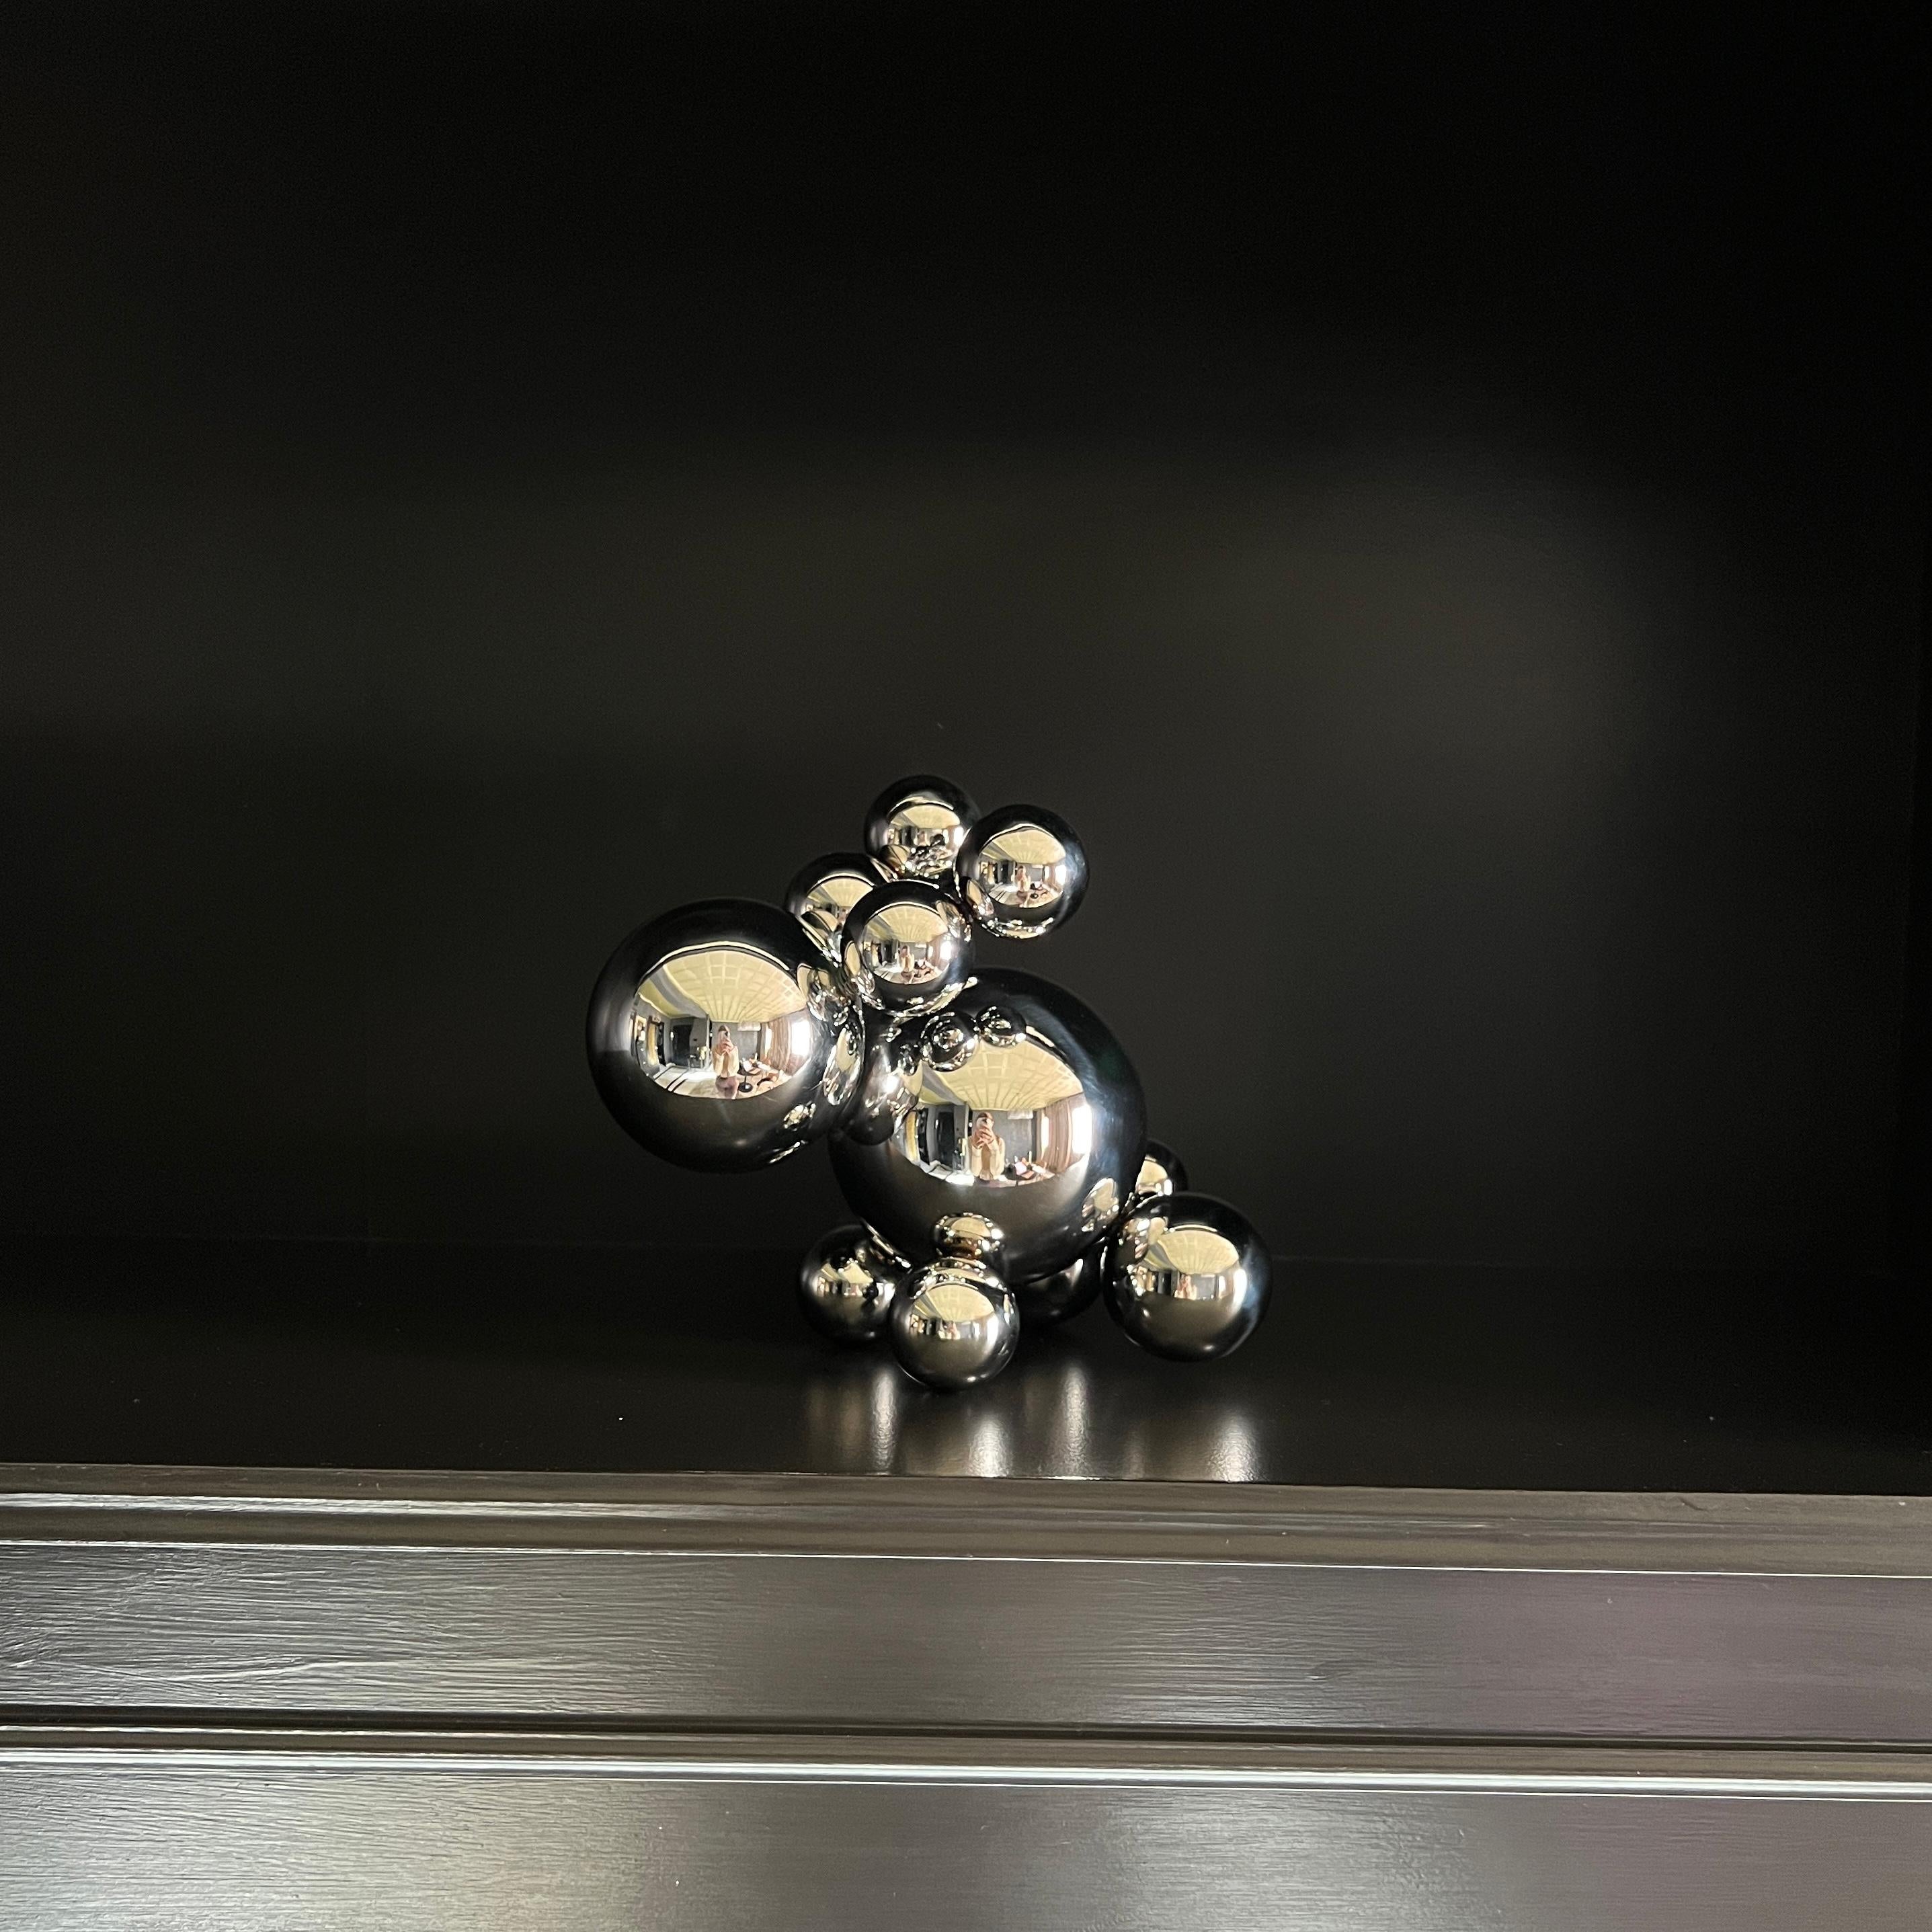 Stainless Steel Rabbit Bunny Robot 'Wait...' Minimalistic Art 2